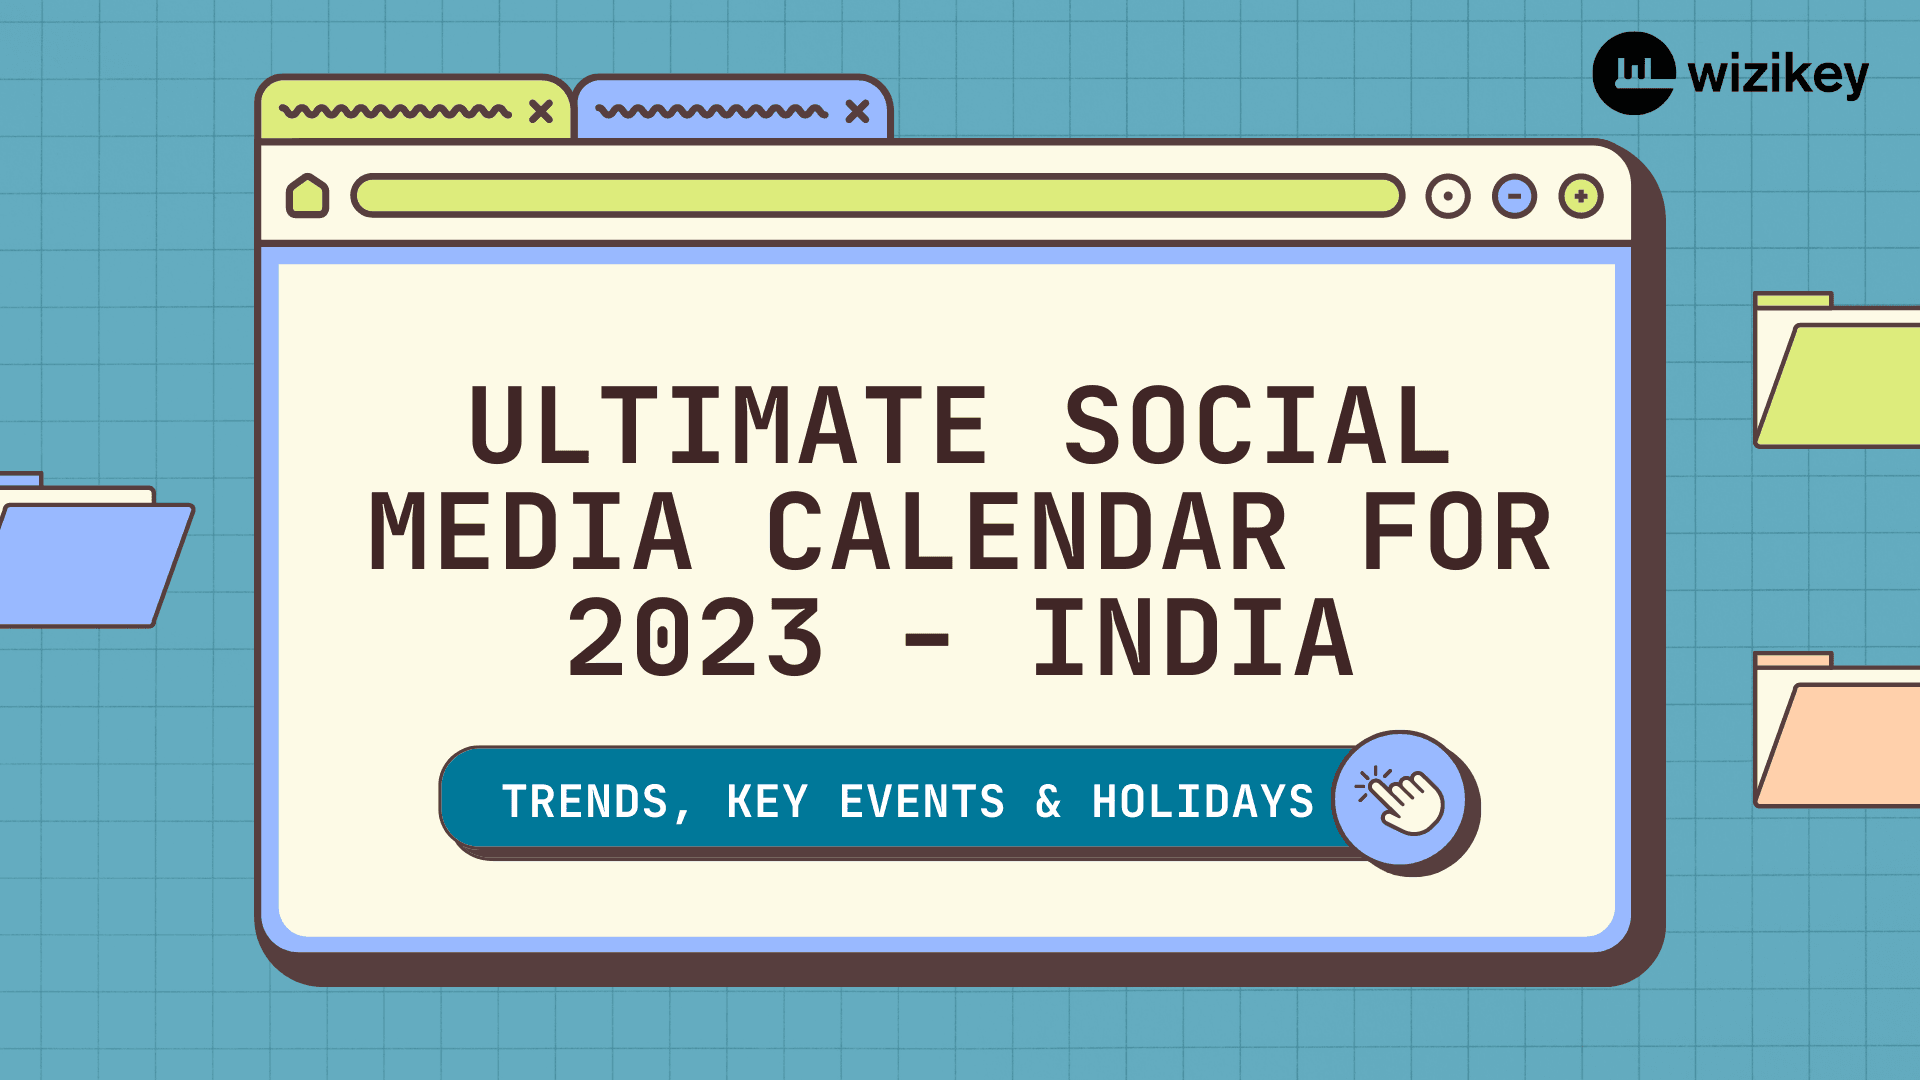 The Ultimate Social Media Calendar for 2023 for India